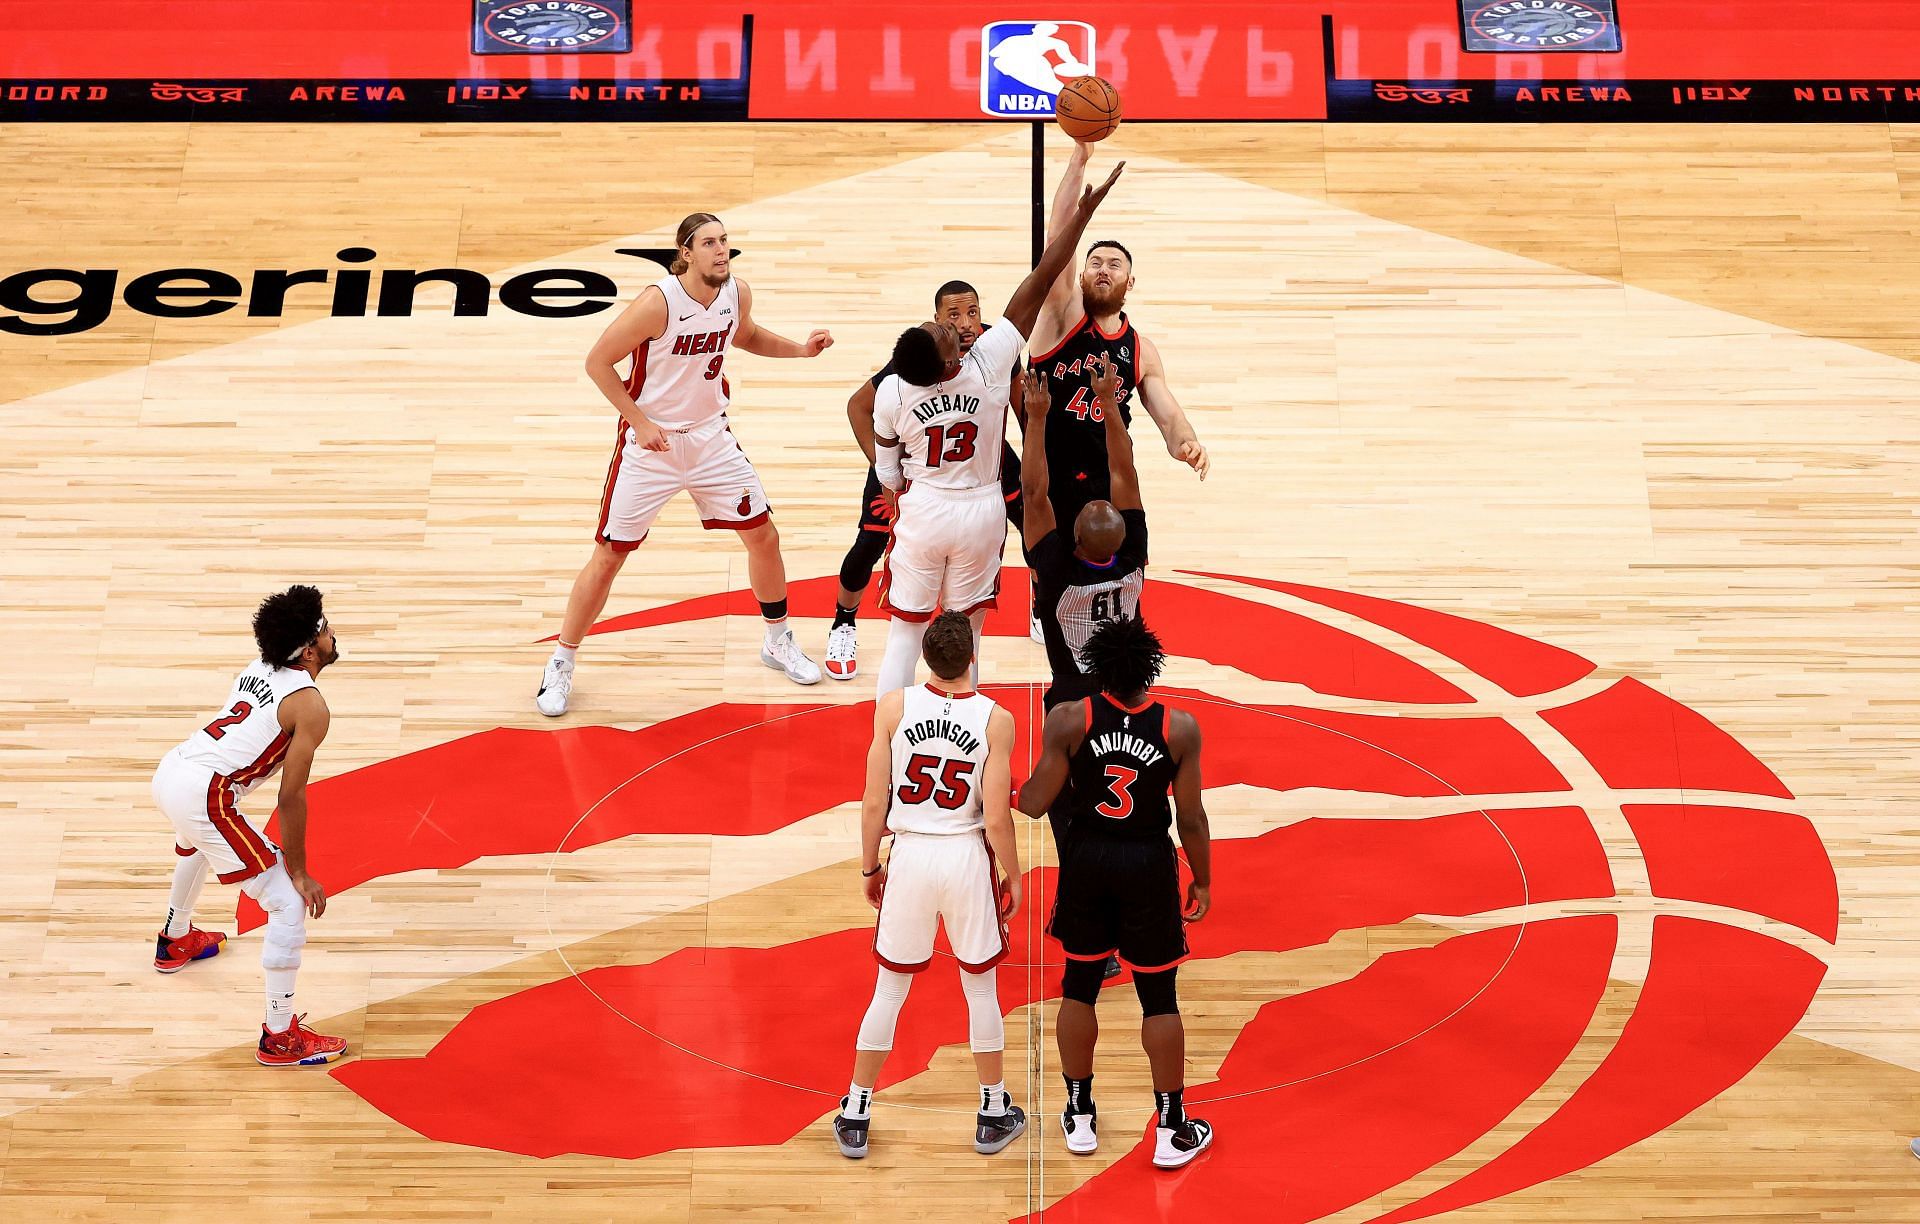 The Toronto Raptors will host the Miami Heat on February 1st.